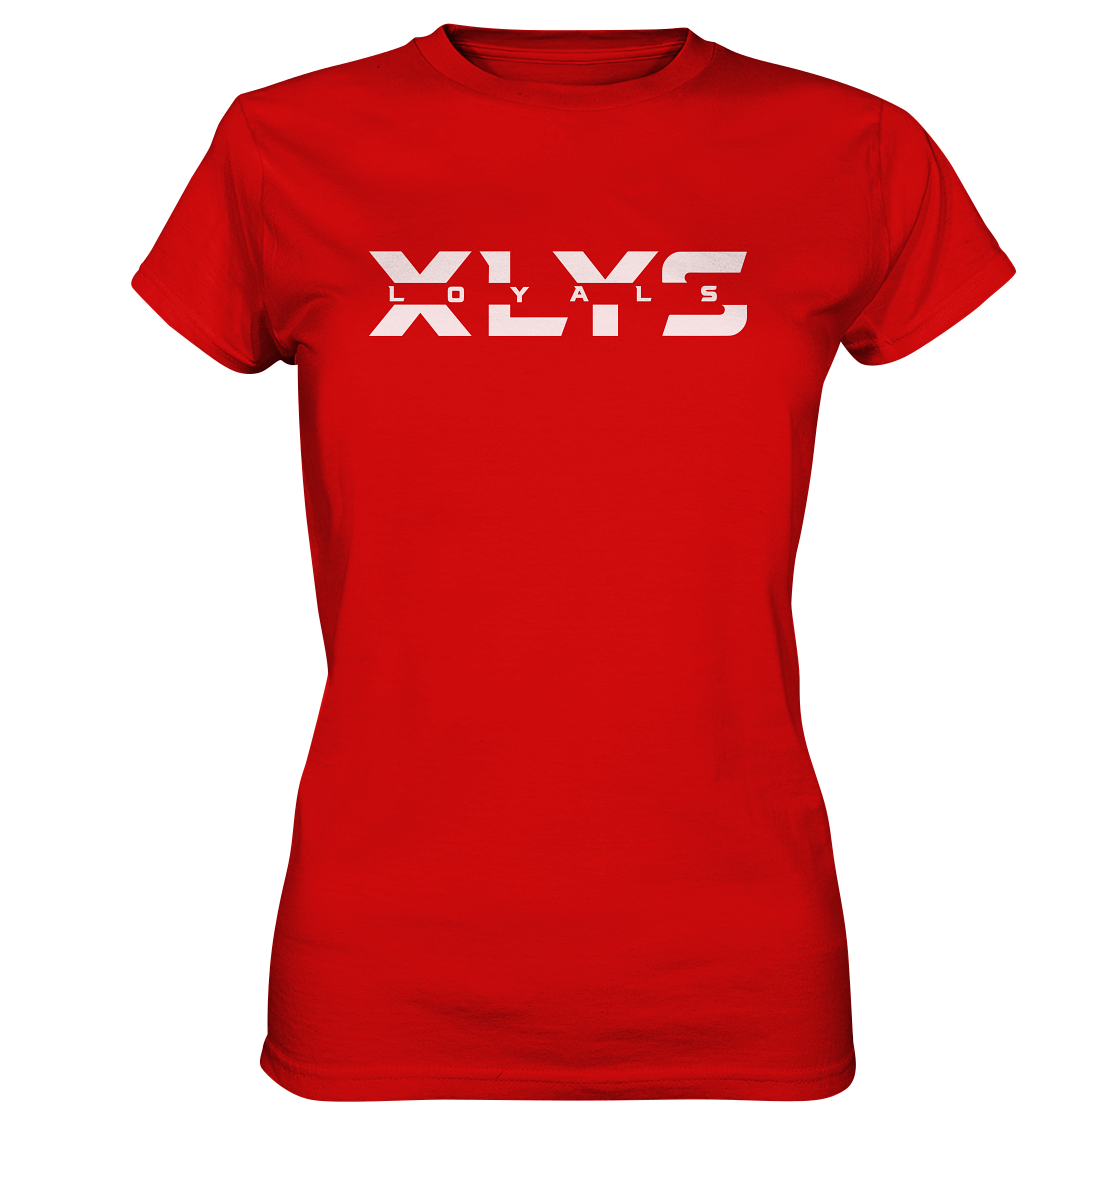 XLYS LOYALS - Ladies Basic Shirt